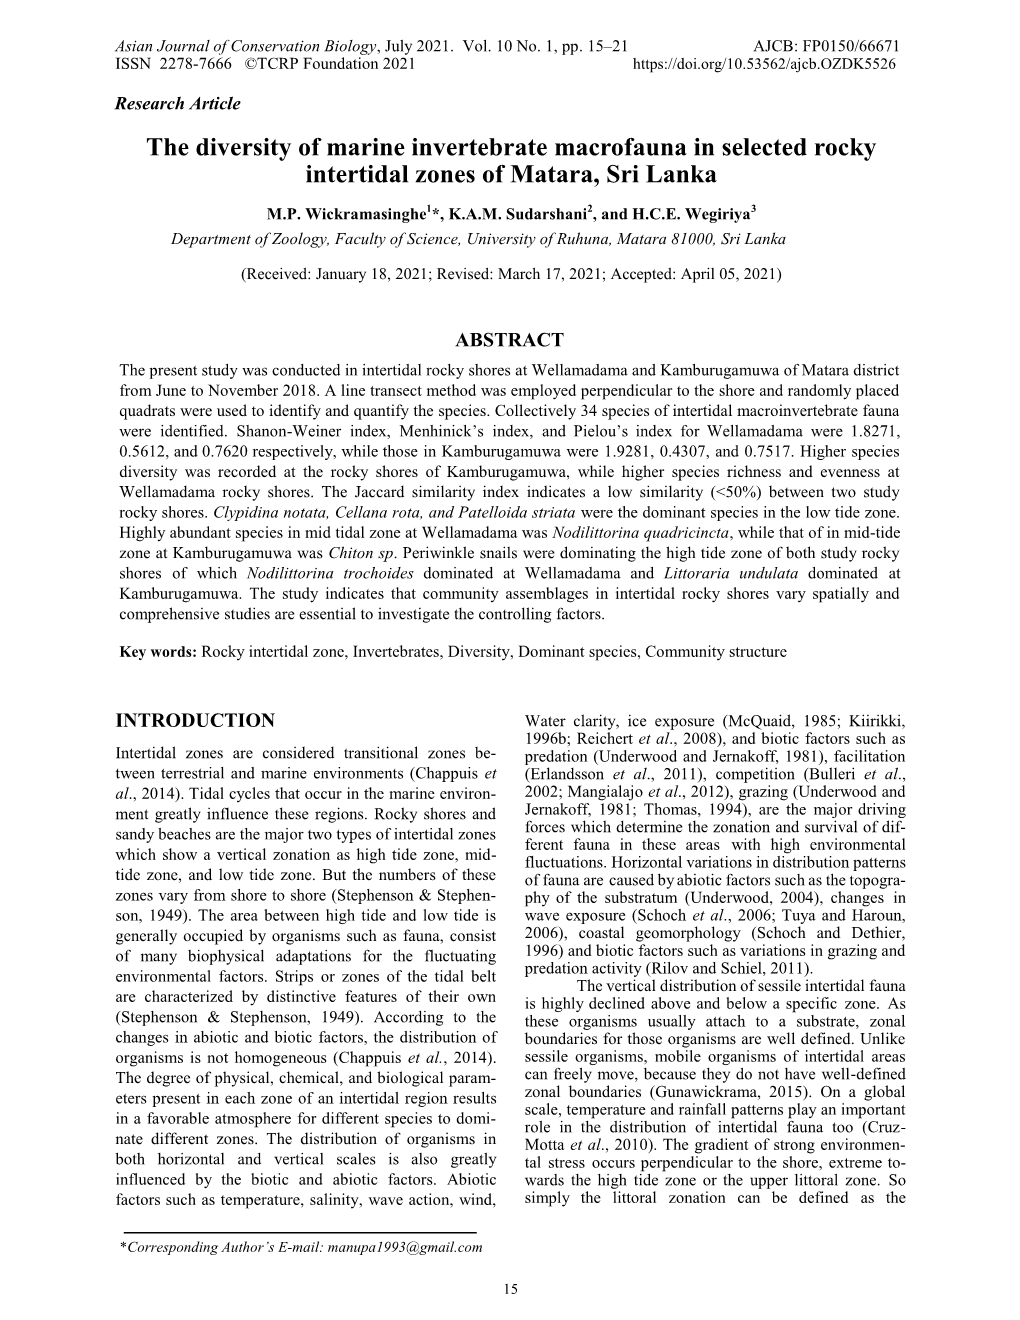 The Diversity of Marine Invertebrate Macrofauna in Selected Rocky Intertidal Zones of Matara, Sri Lanka